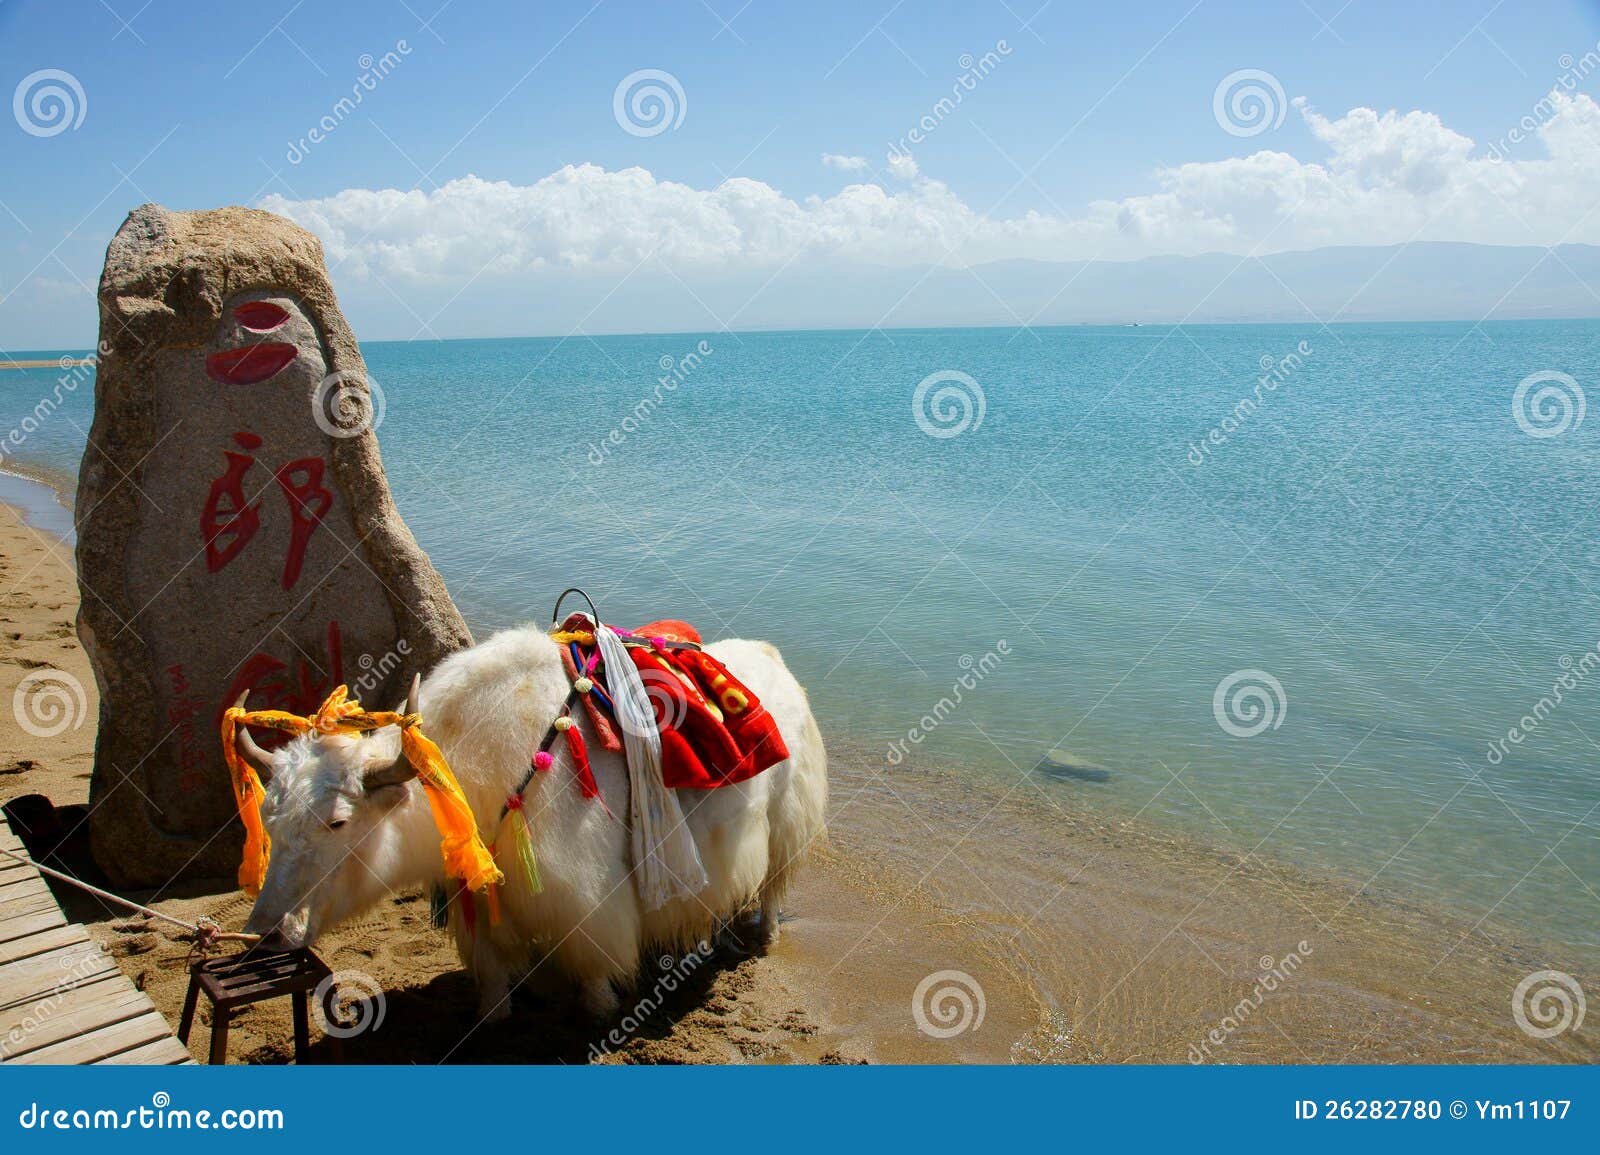 qinghai lake and yak